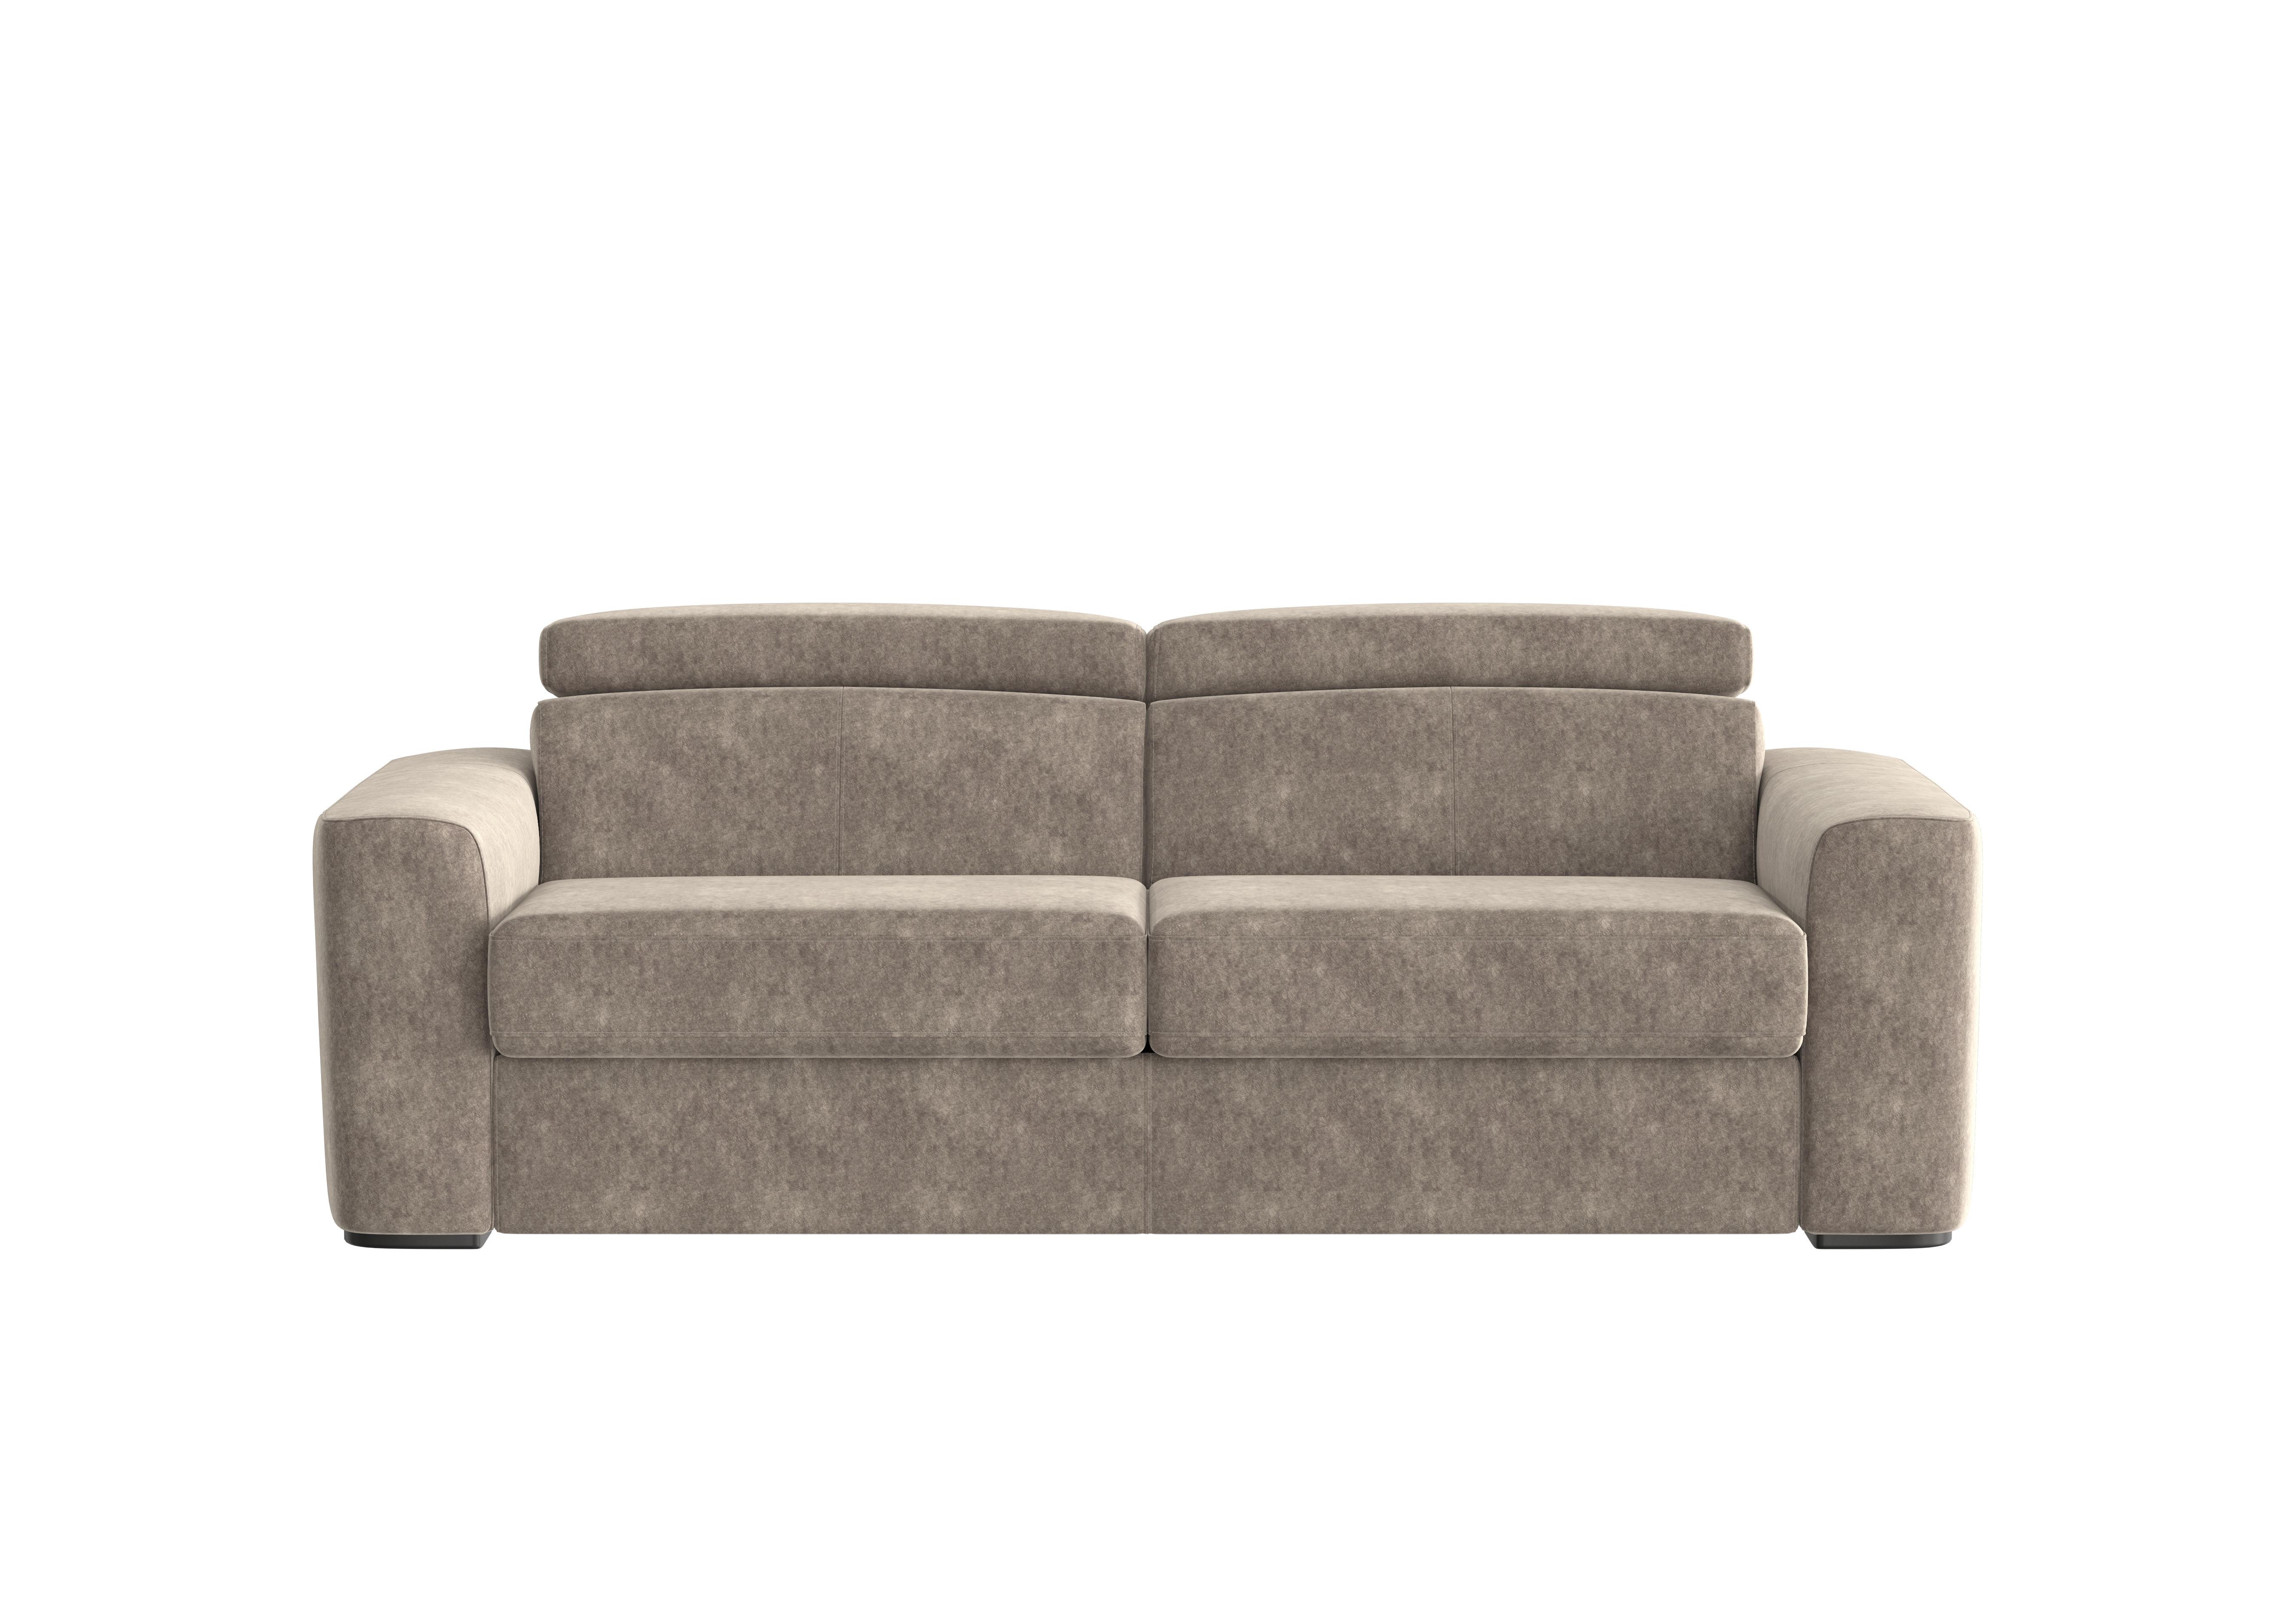 Infinity 3 Seater Fabric Sofa Bed in Bfa-Bnn-R29 Fv1 Mink on Furniture Village